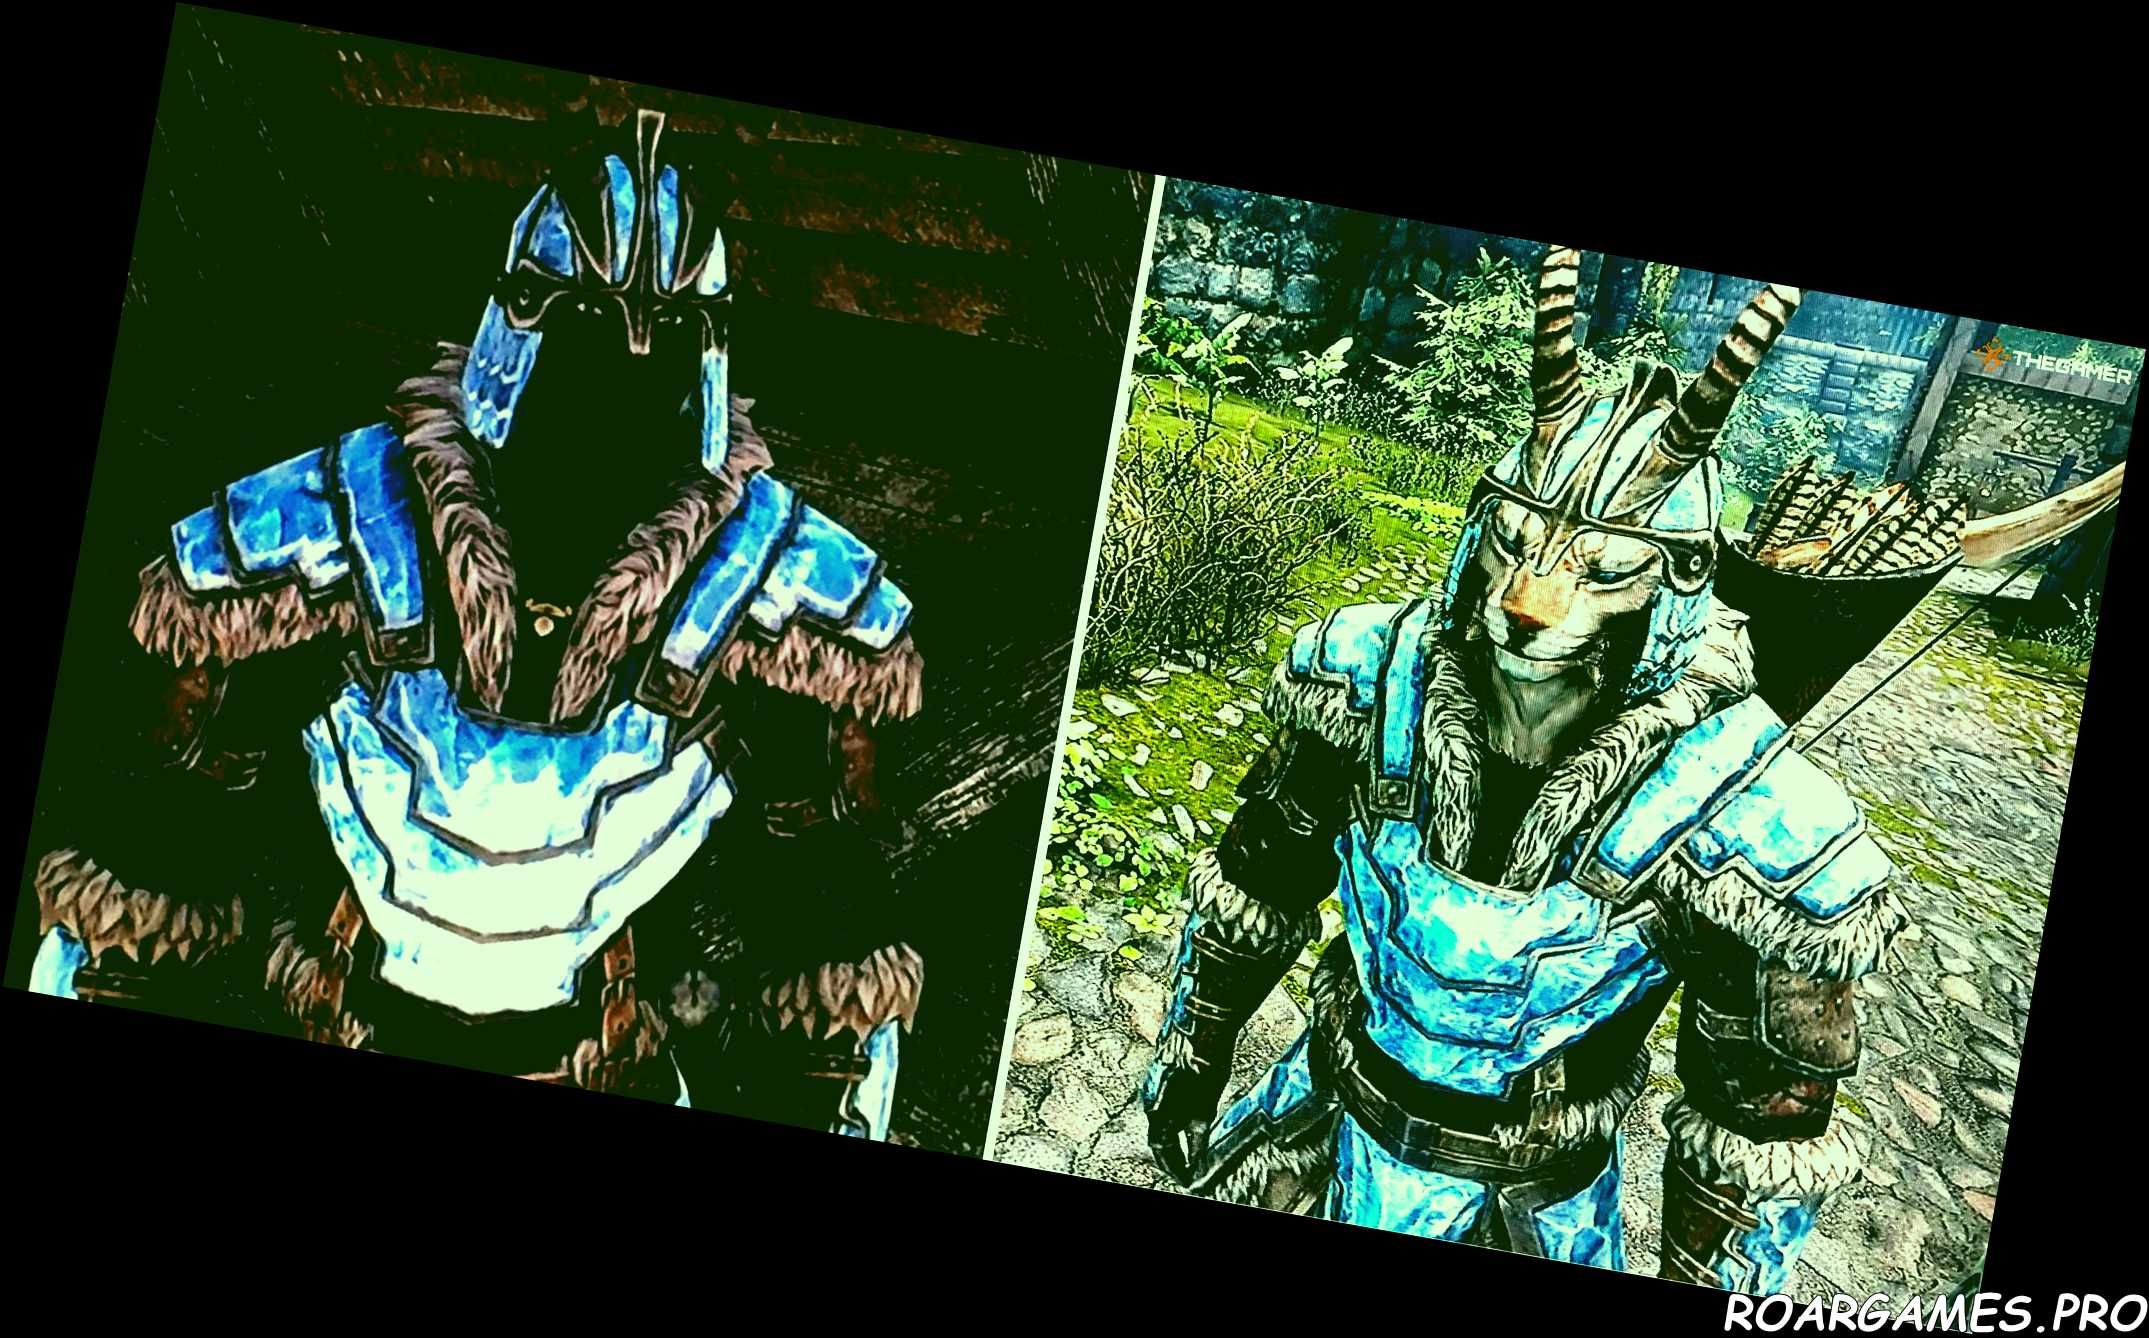 Skyrim Deathbrand Armor worn by the player split image